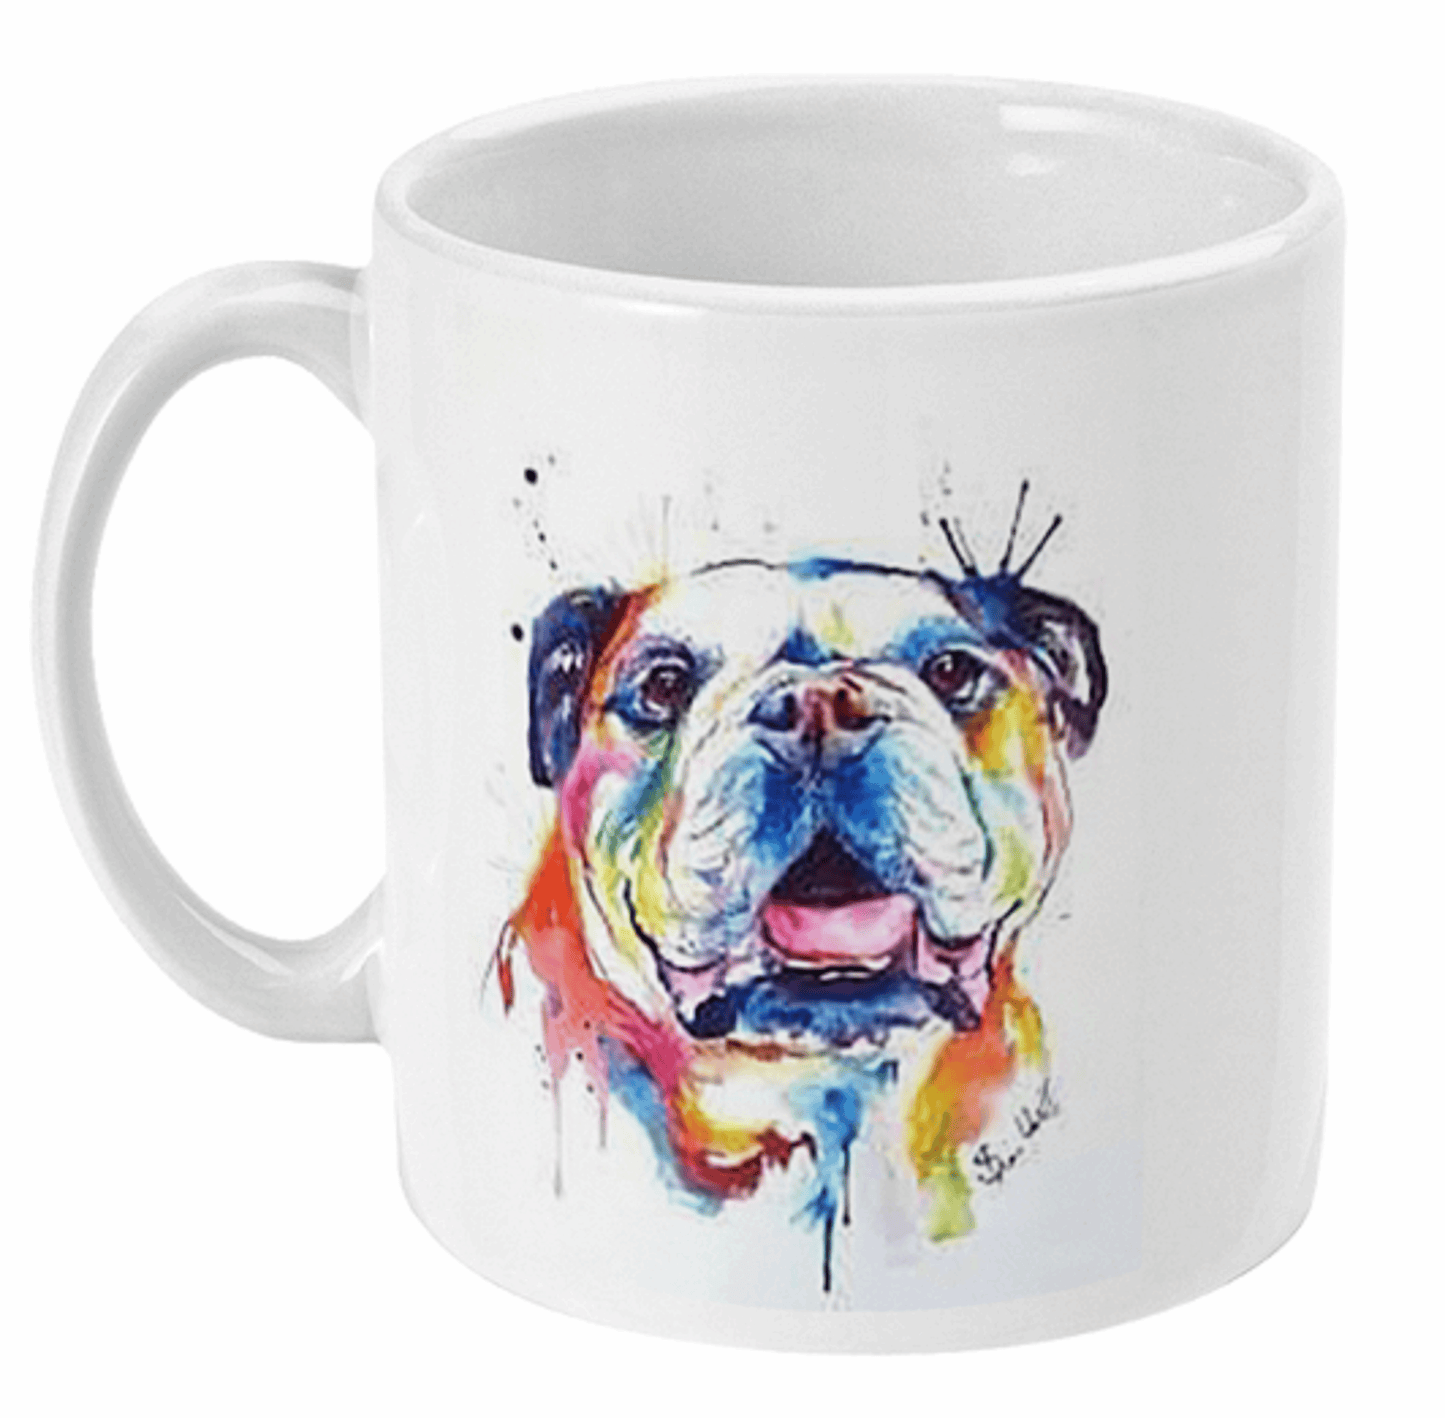  Beautiful Watercolour Bulldog Coffee Mug by Free Spirit Accessories sold by Free Spirit Accessories